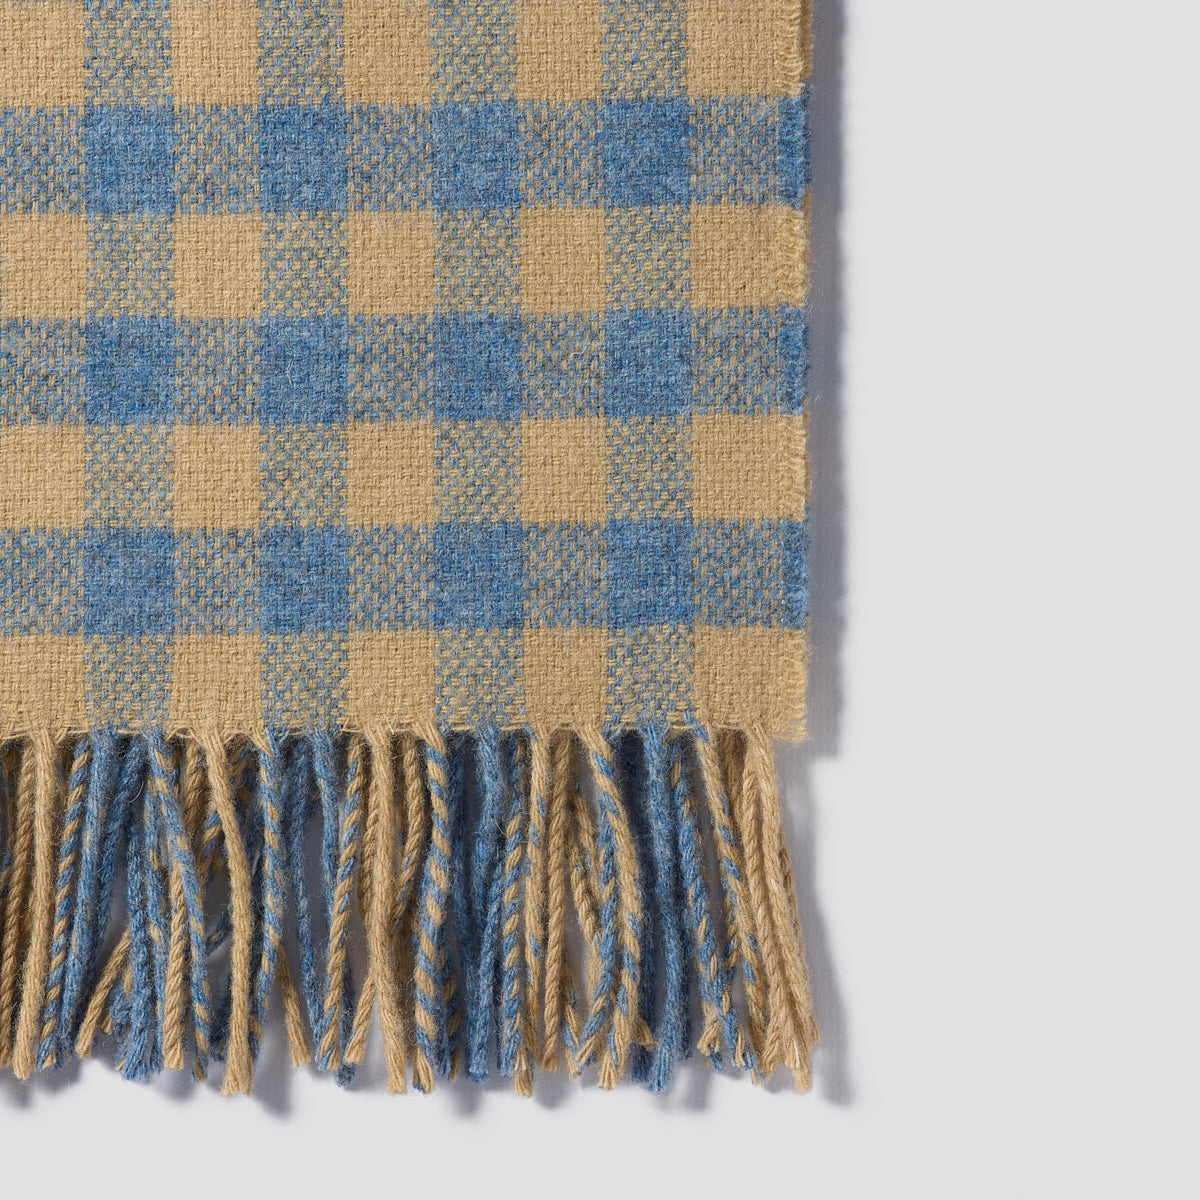 Warm Blue Gingham Wool Blanket - Piglet in Bed